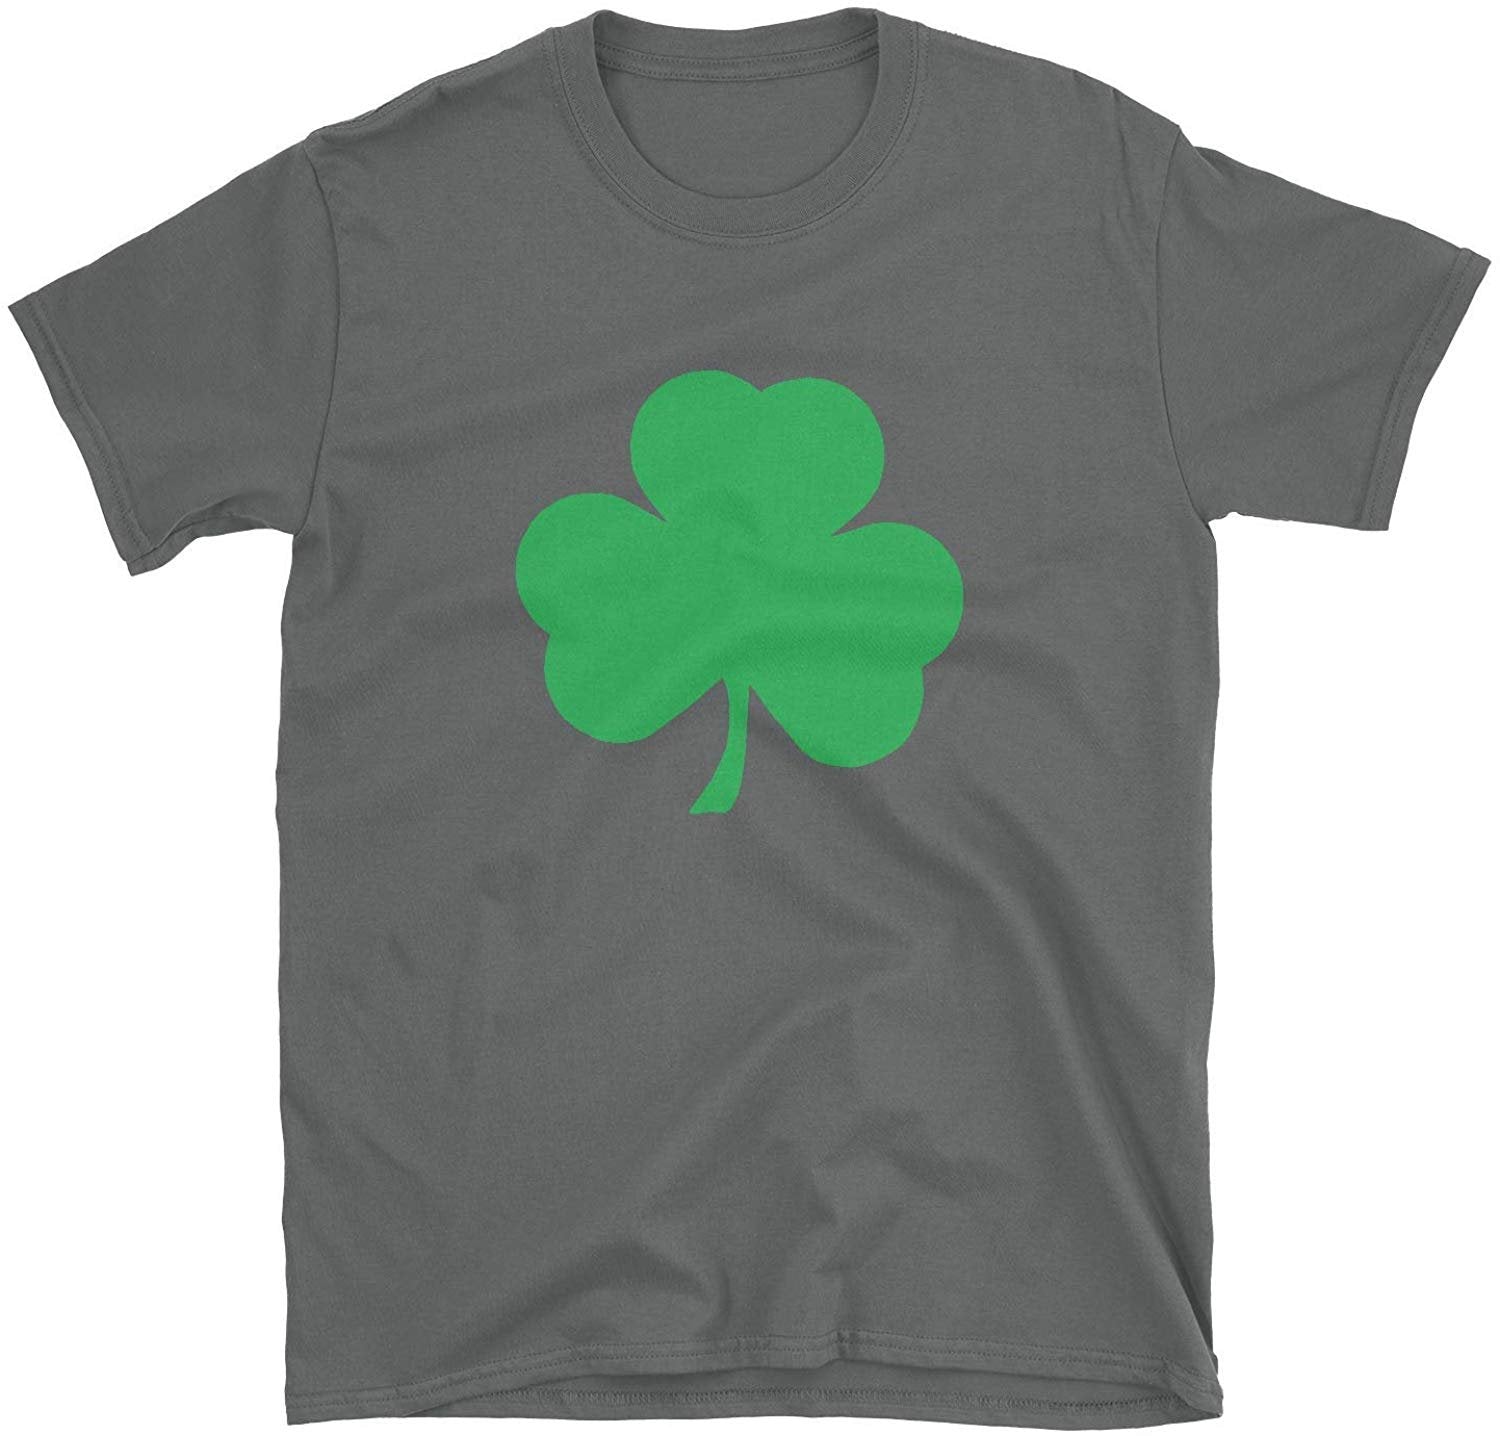 NYC FACTORY USA Screen Printed Shamrock Youth T-Shirt Distressed Tee Kids Irish Green